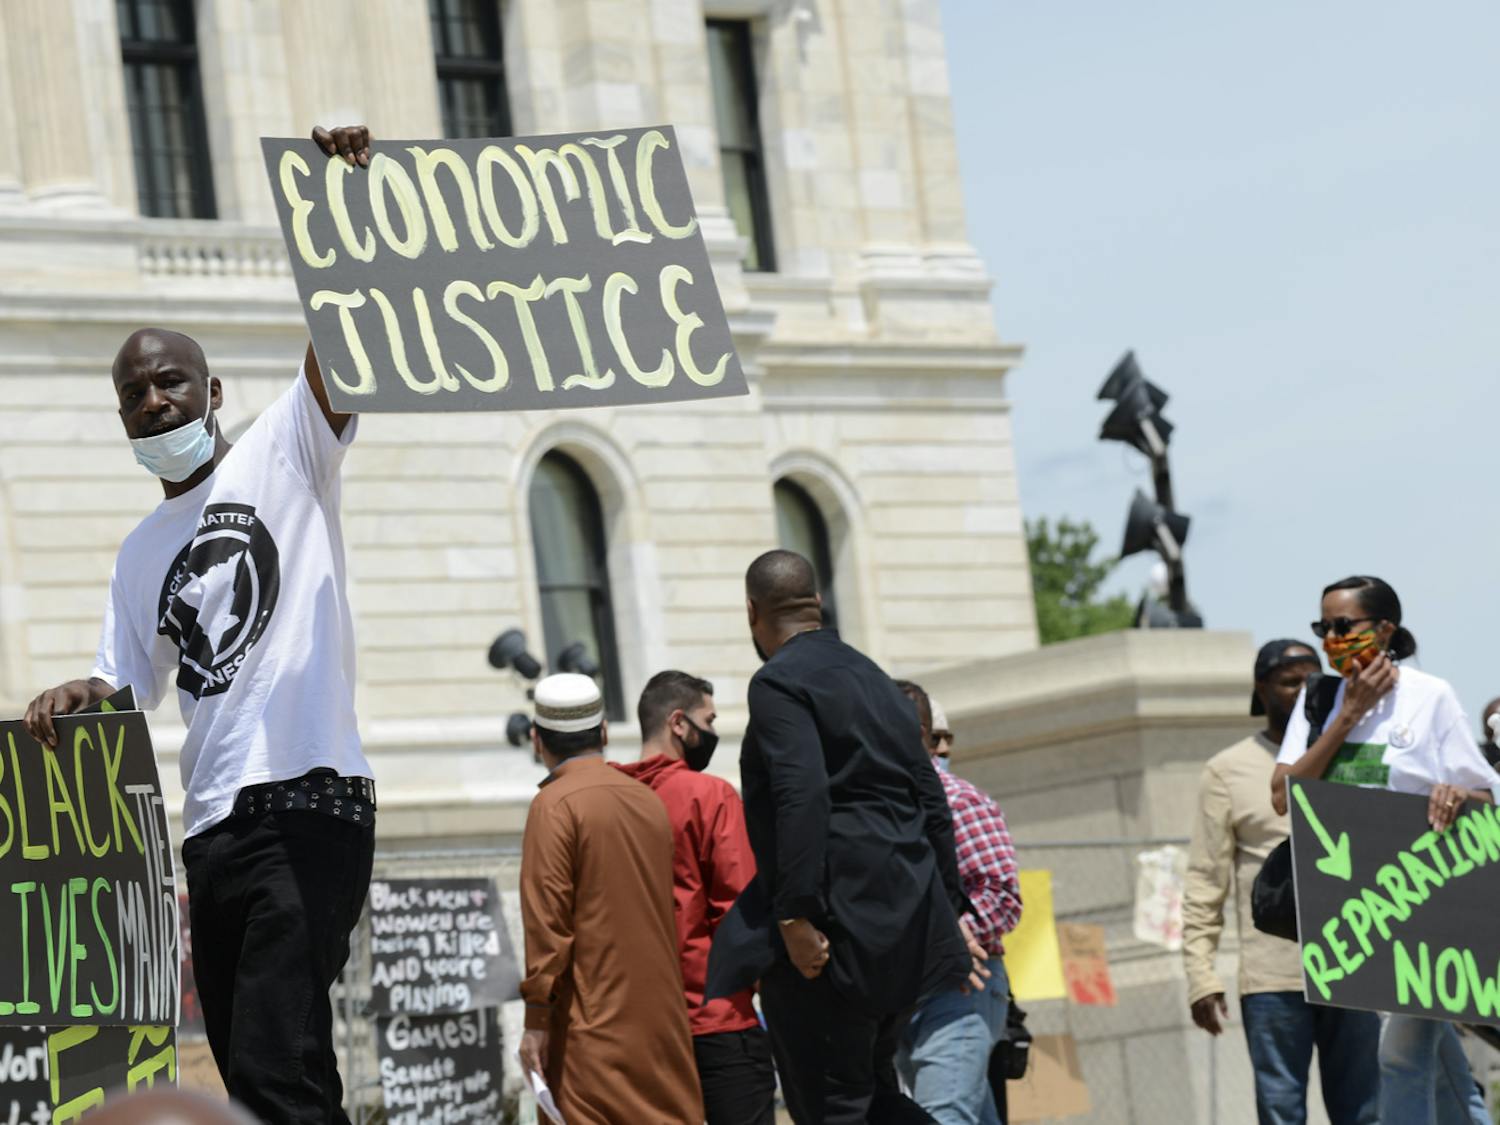 Economic justice protest